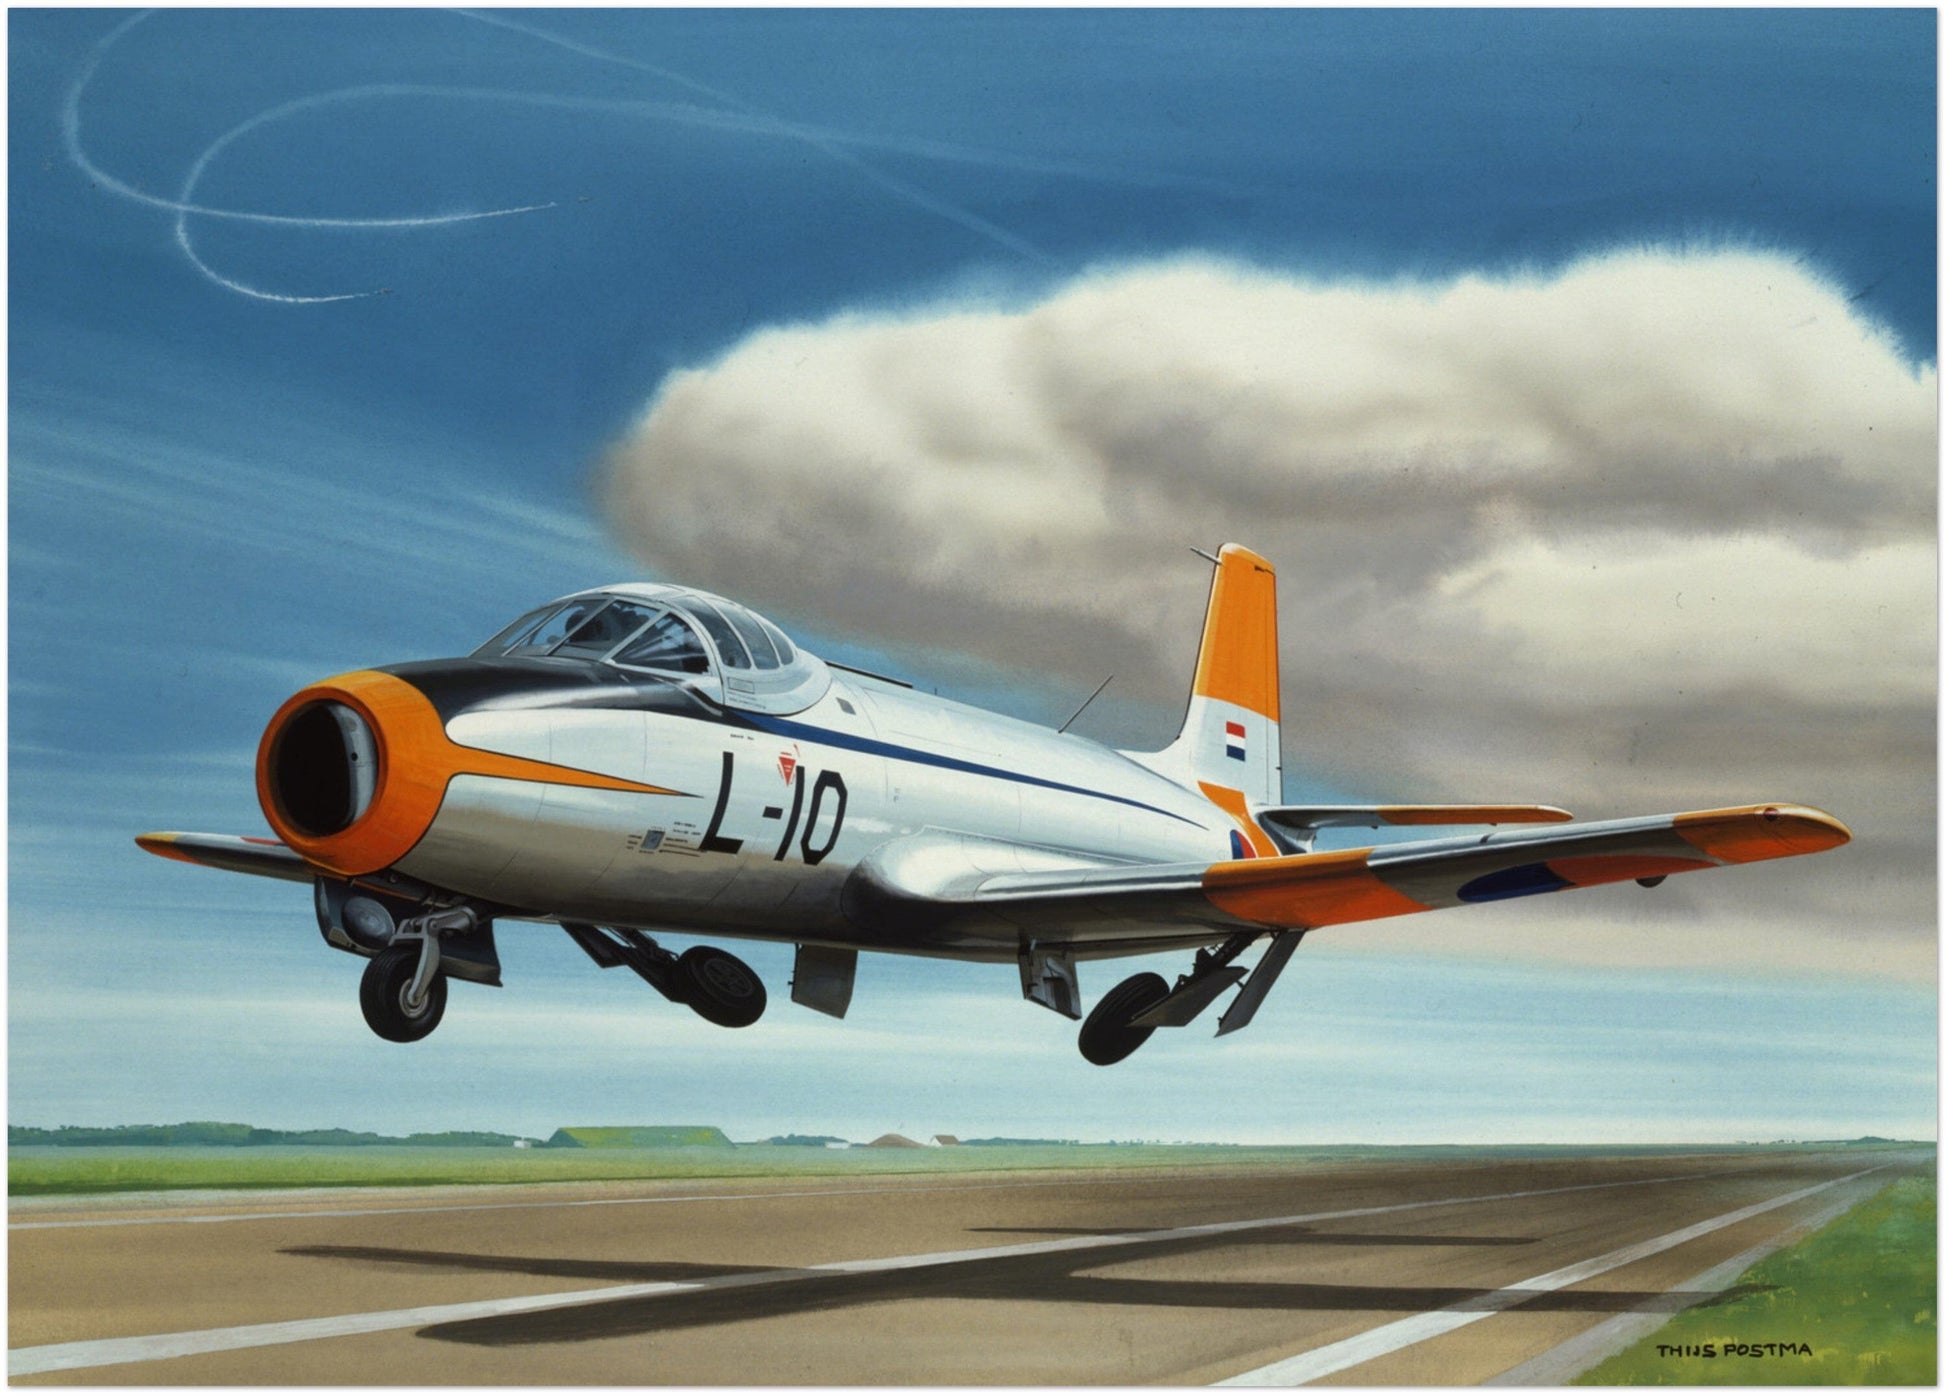 Thijs Postma - Original Painting - Fokker S-14 Mach Trainer Original Painting TP Aviation Art 